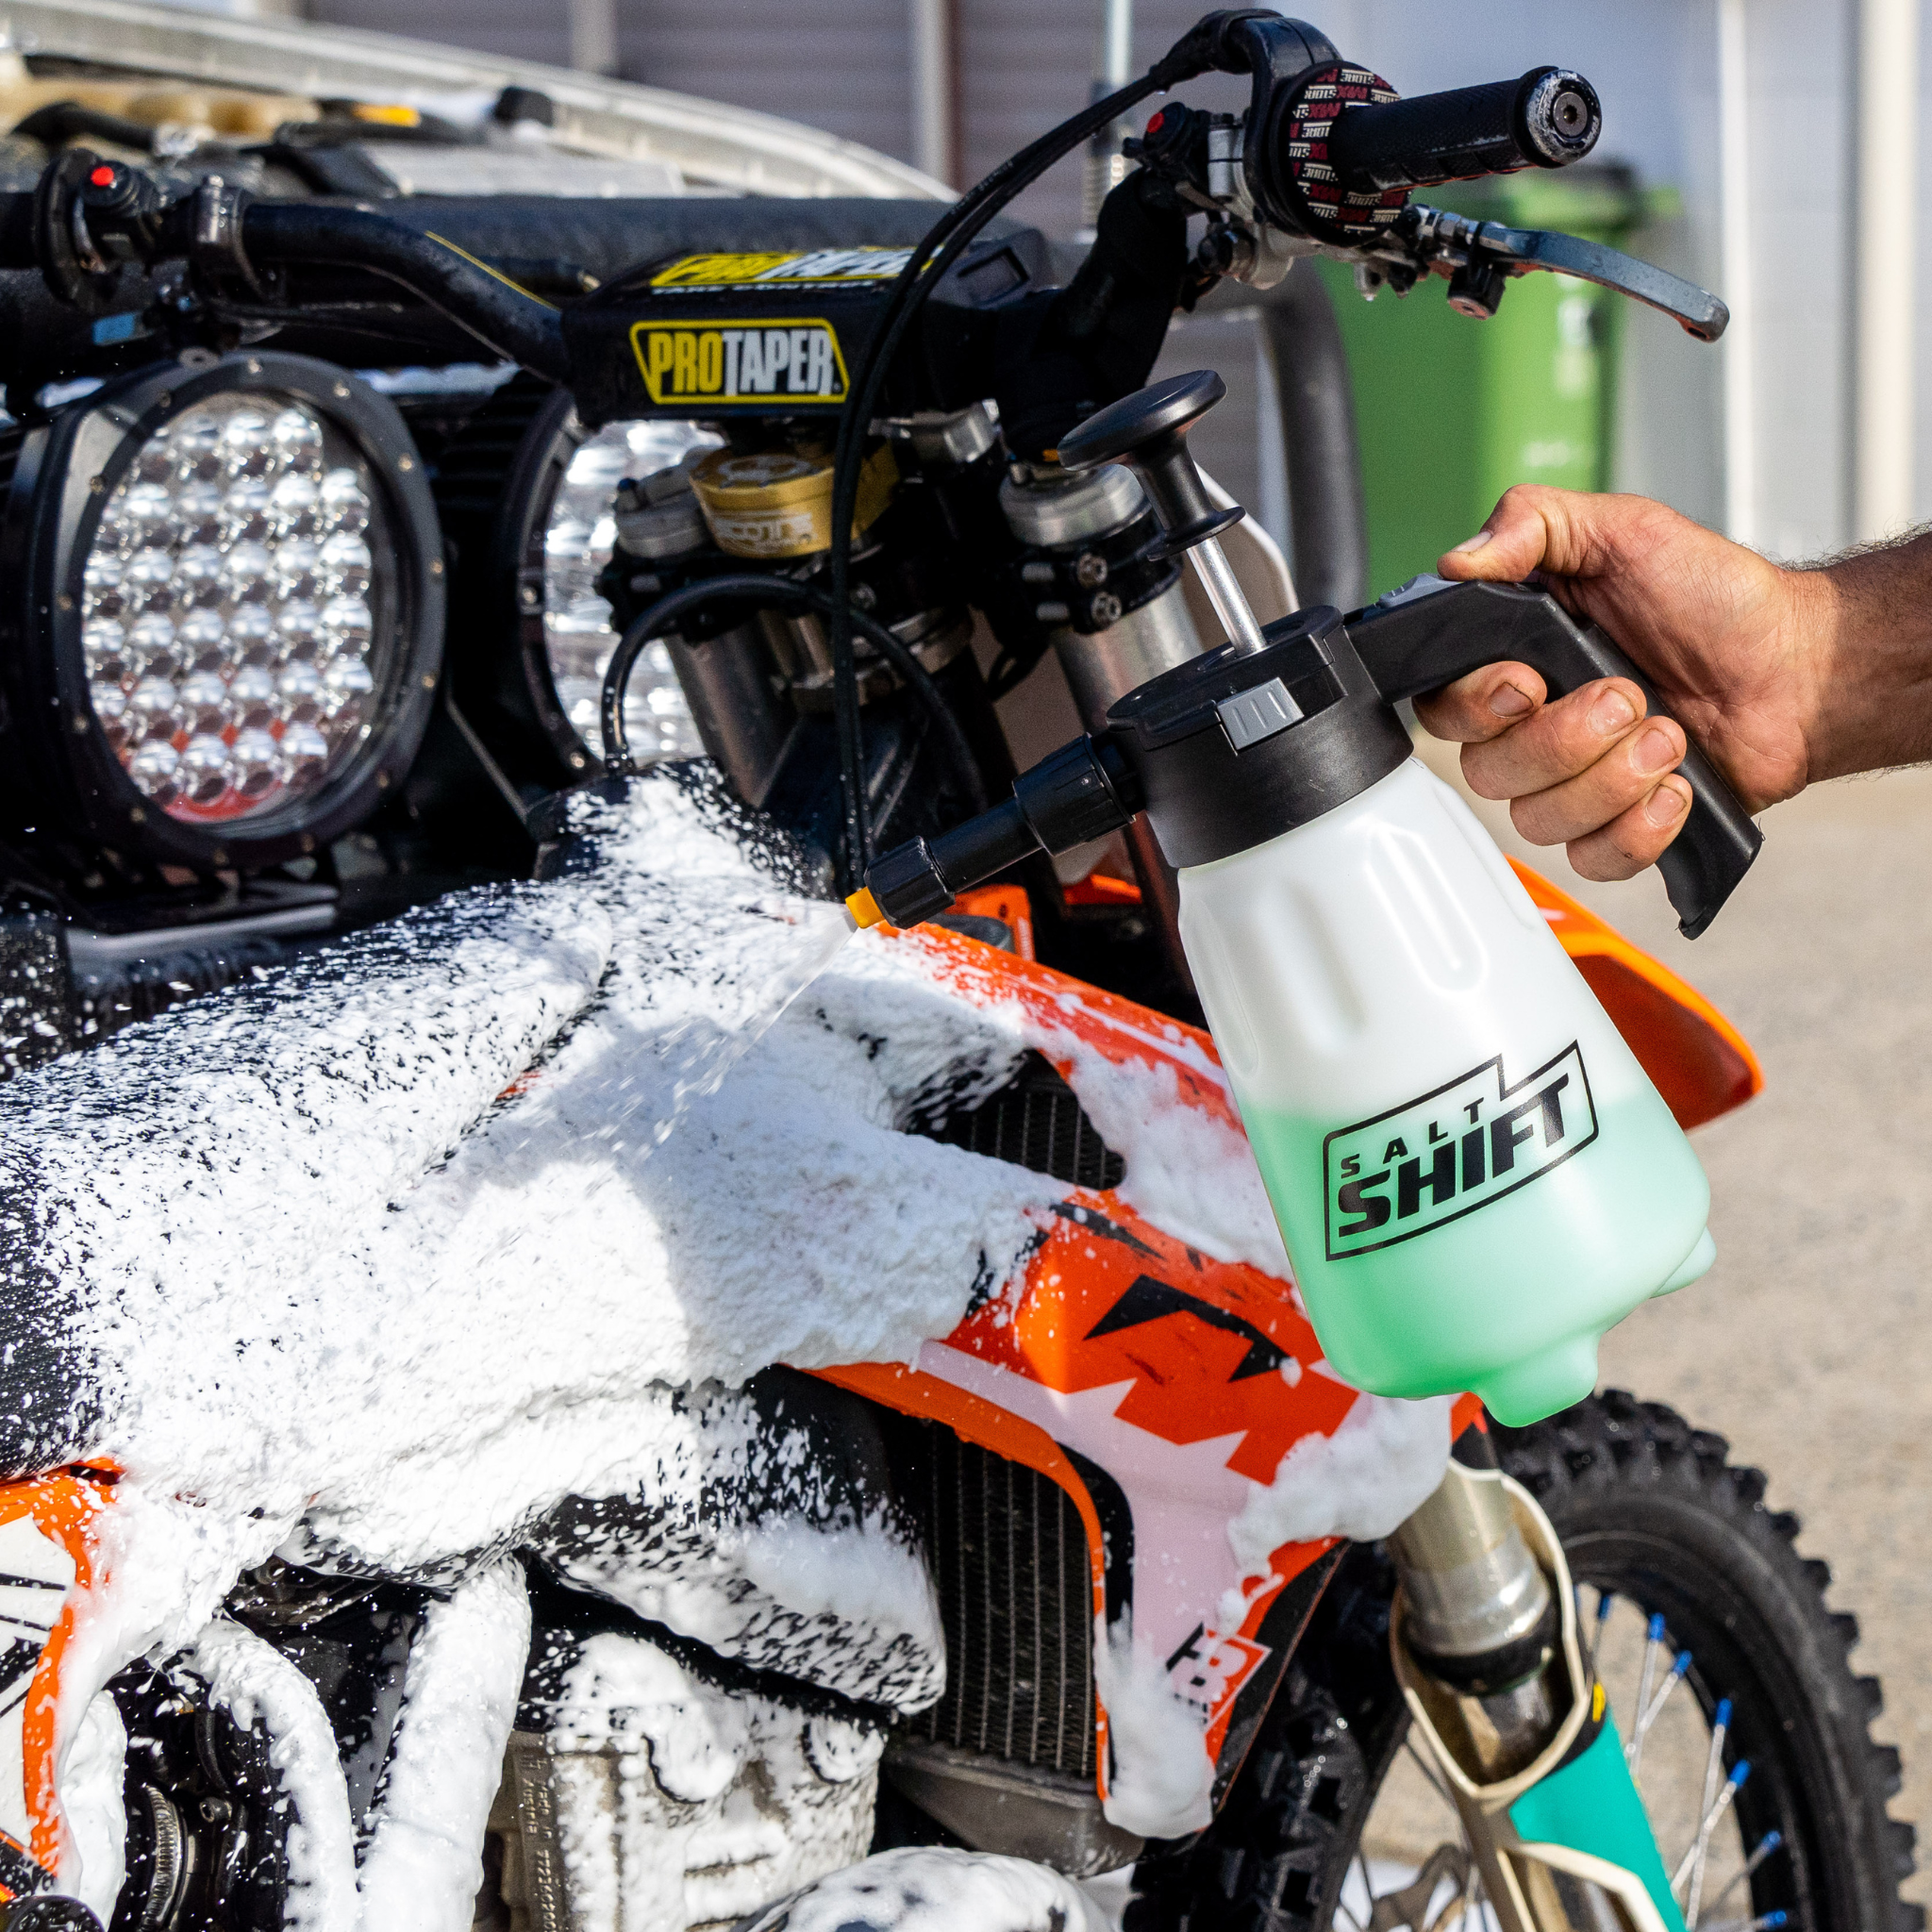 foam gun to clean dirt bike when muddy